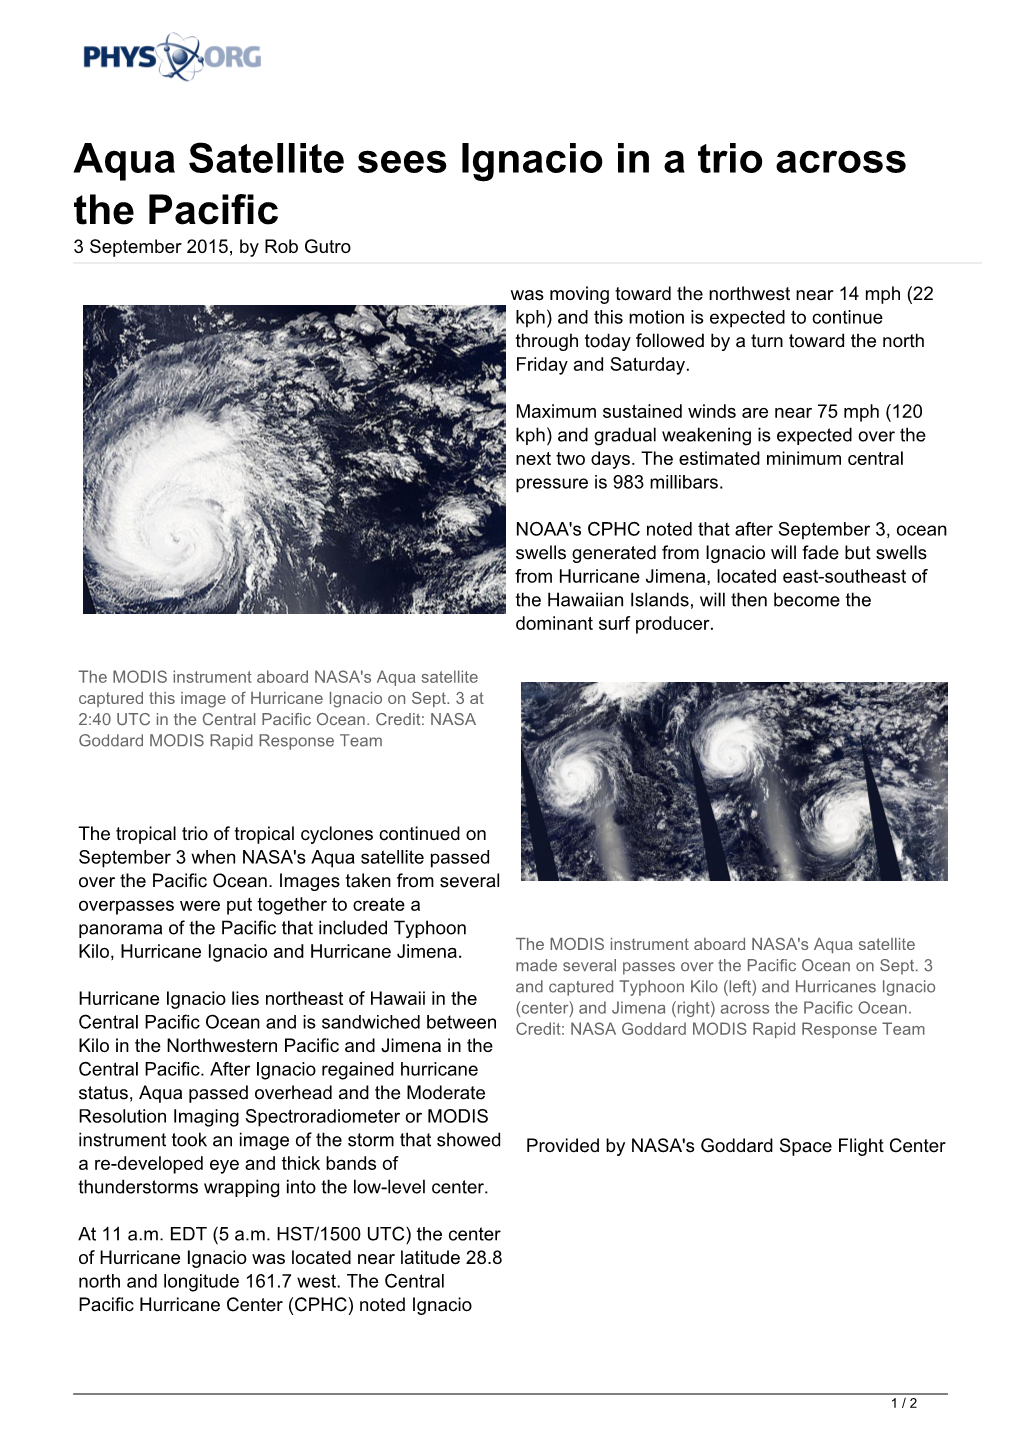 Aqua Satellite Sees Ignacio in a Trio Across the Pacific 3 September 2015, by Rob Gutro